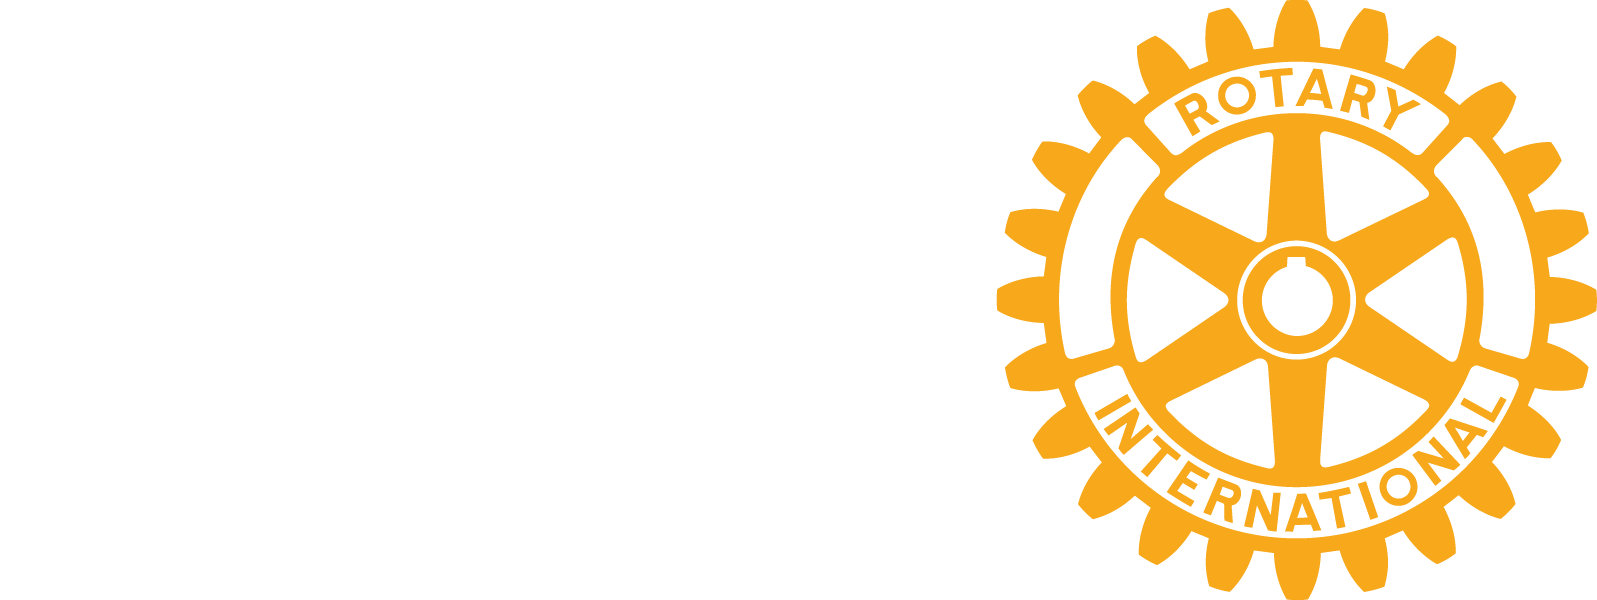 Rotary District 5870 logo